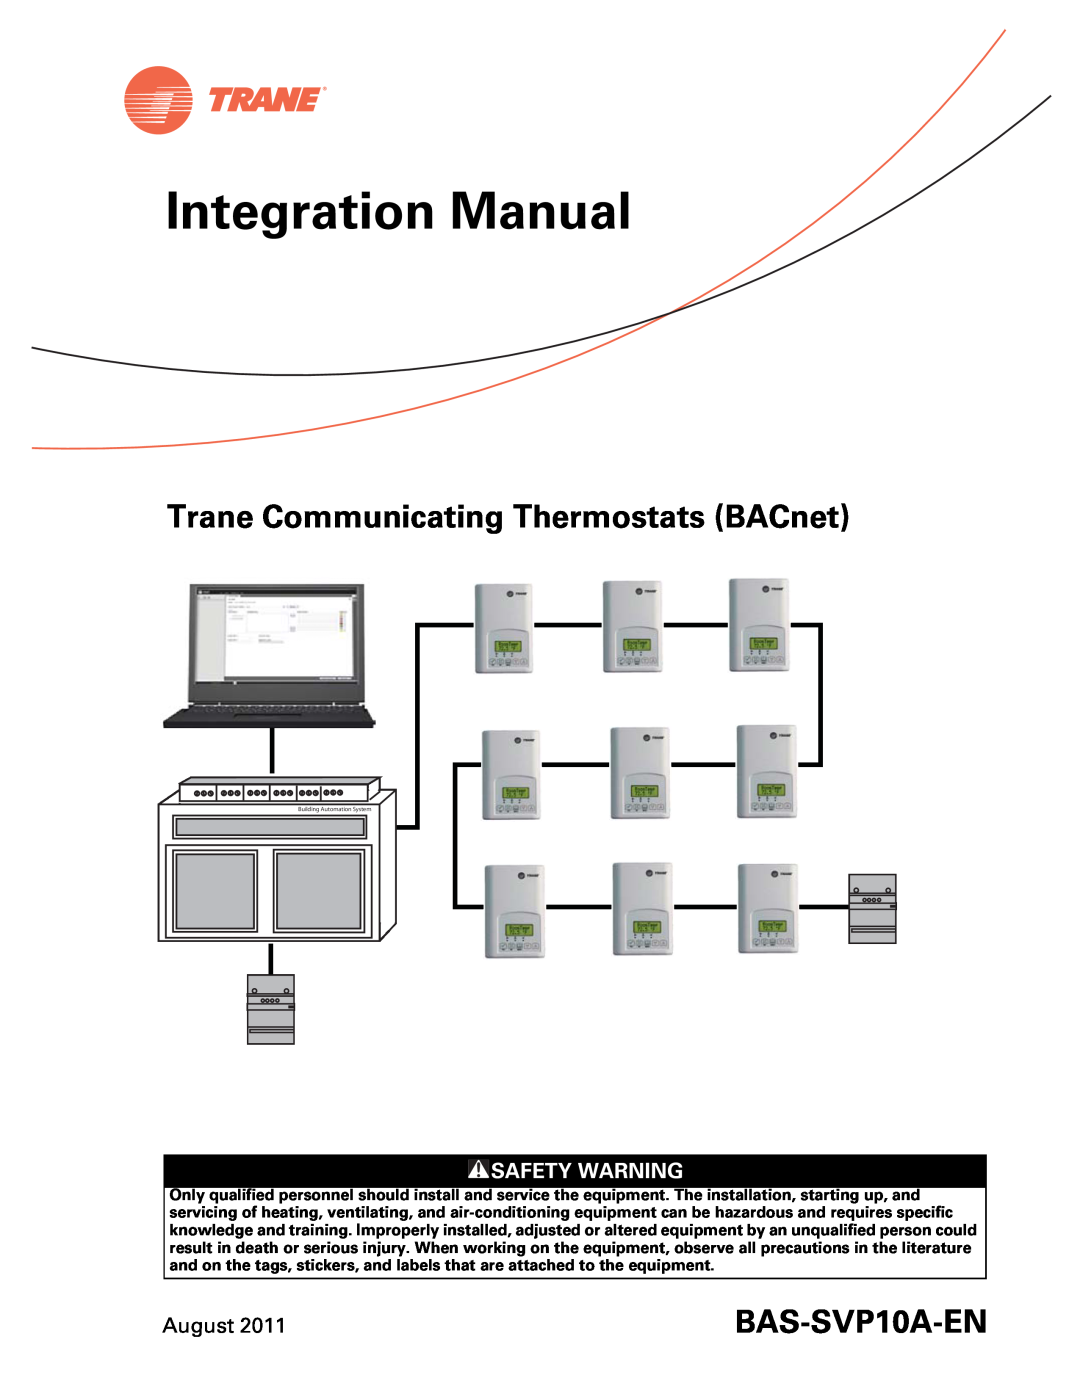 Trane Trane Communicating Thermostats (BACnet) manual Safety Warning, Integration Manual, BAS-SVP10A-EN, August 